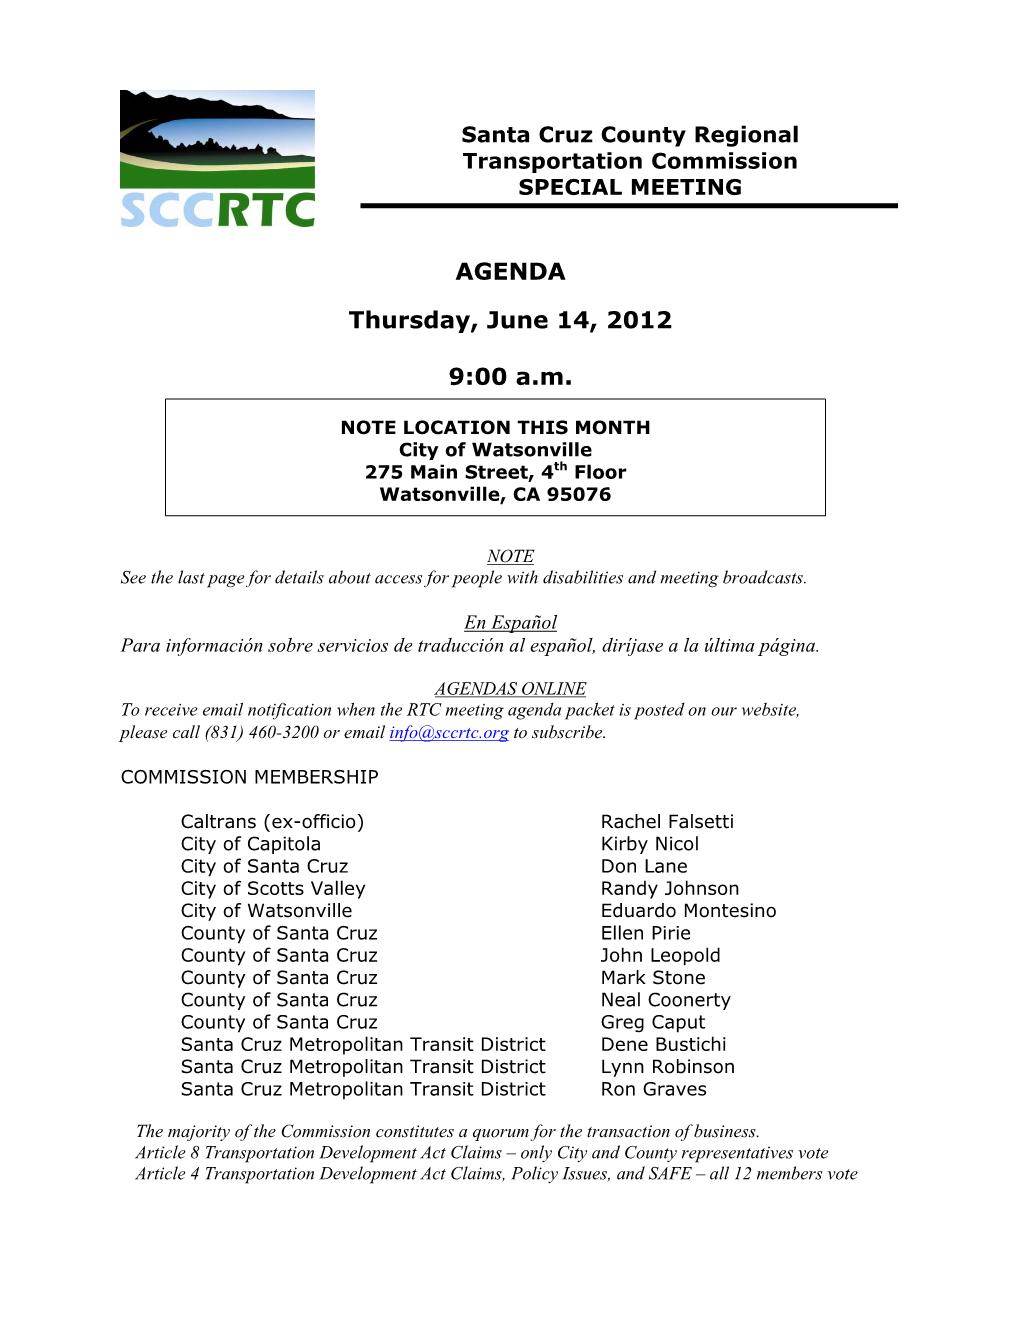 Santa Cruz County Regional Transportation Commission SPECIAL MEETING